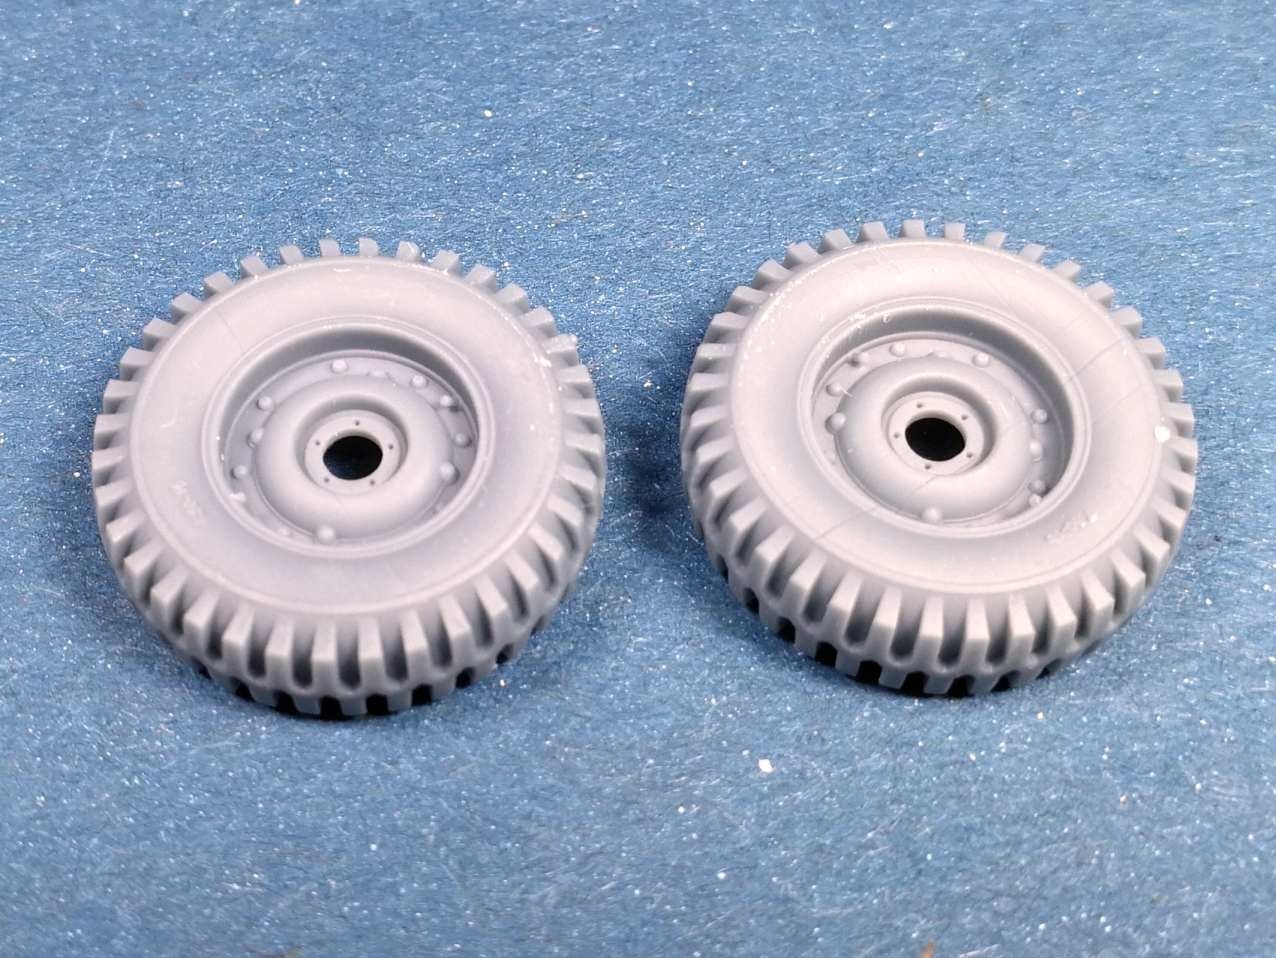 W35020 7.50x16 military pattern spare wheels (2units)